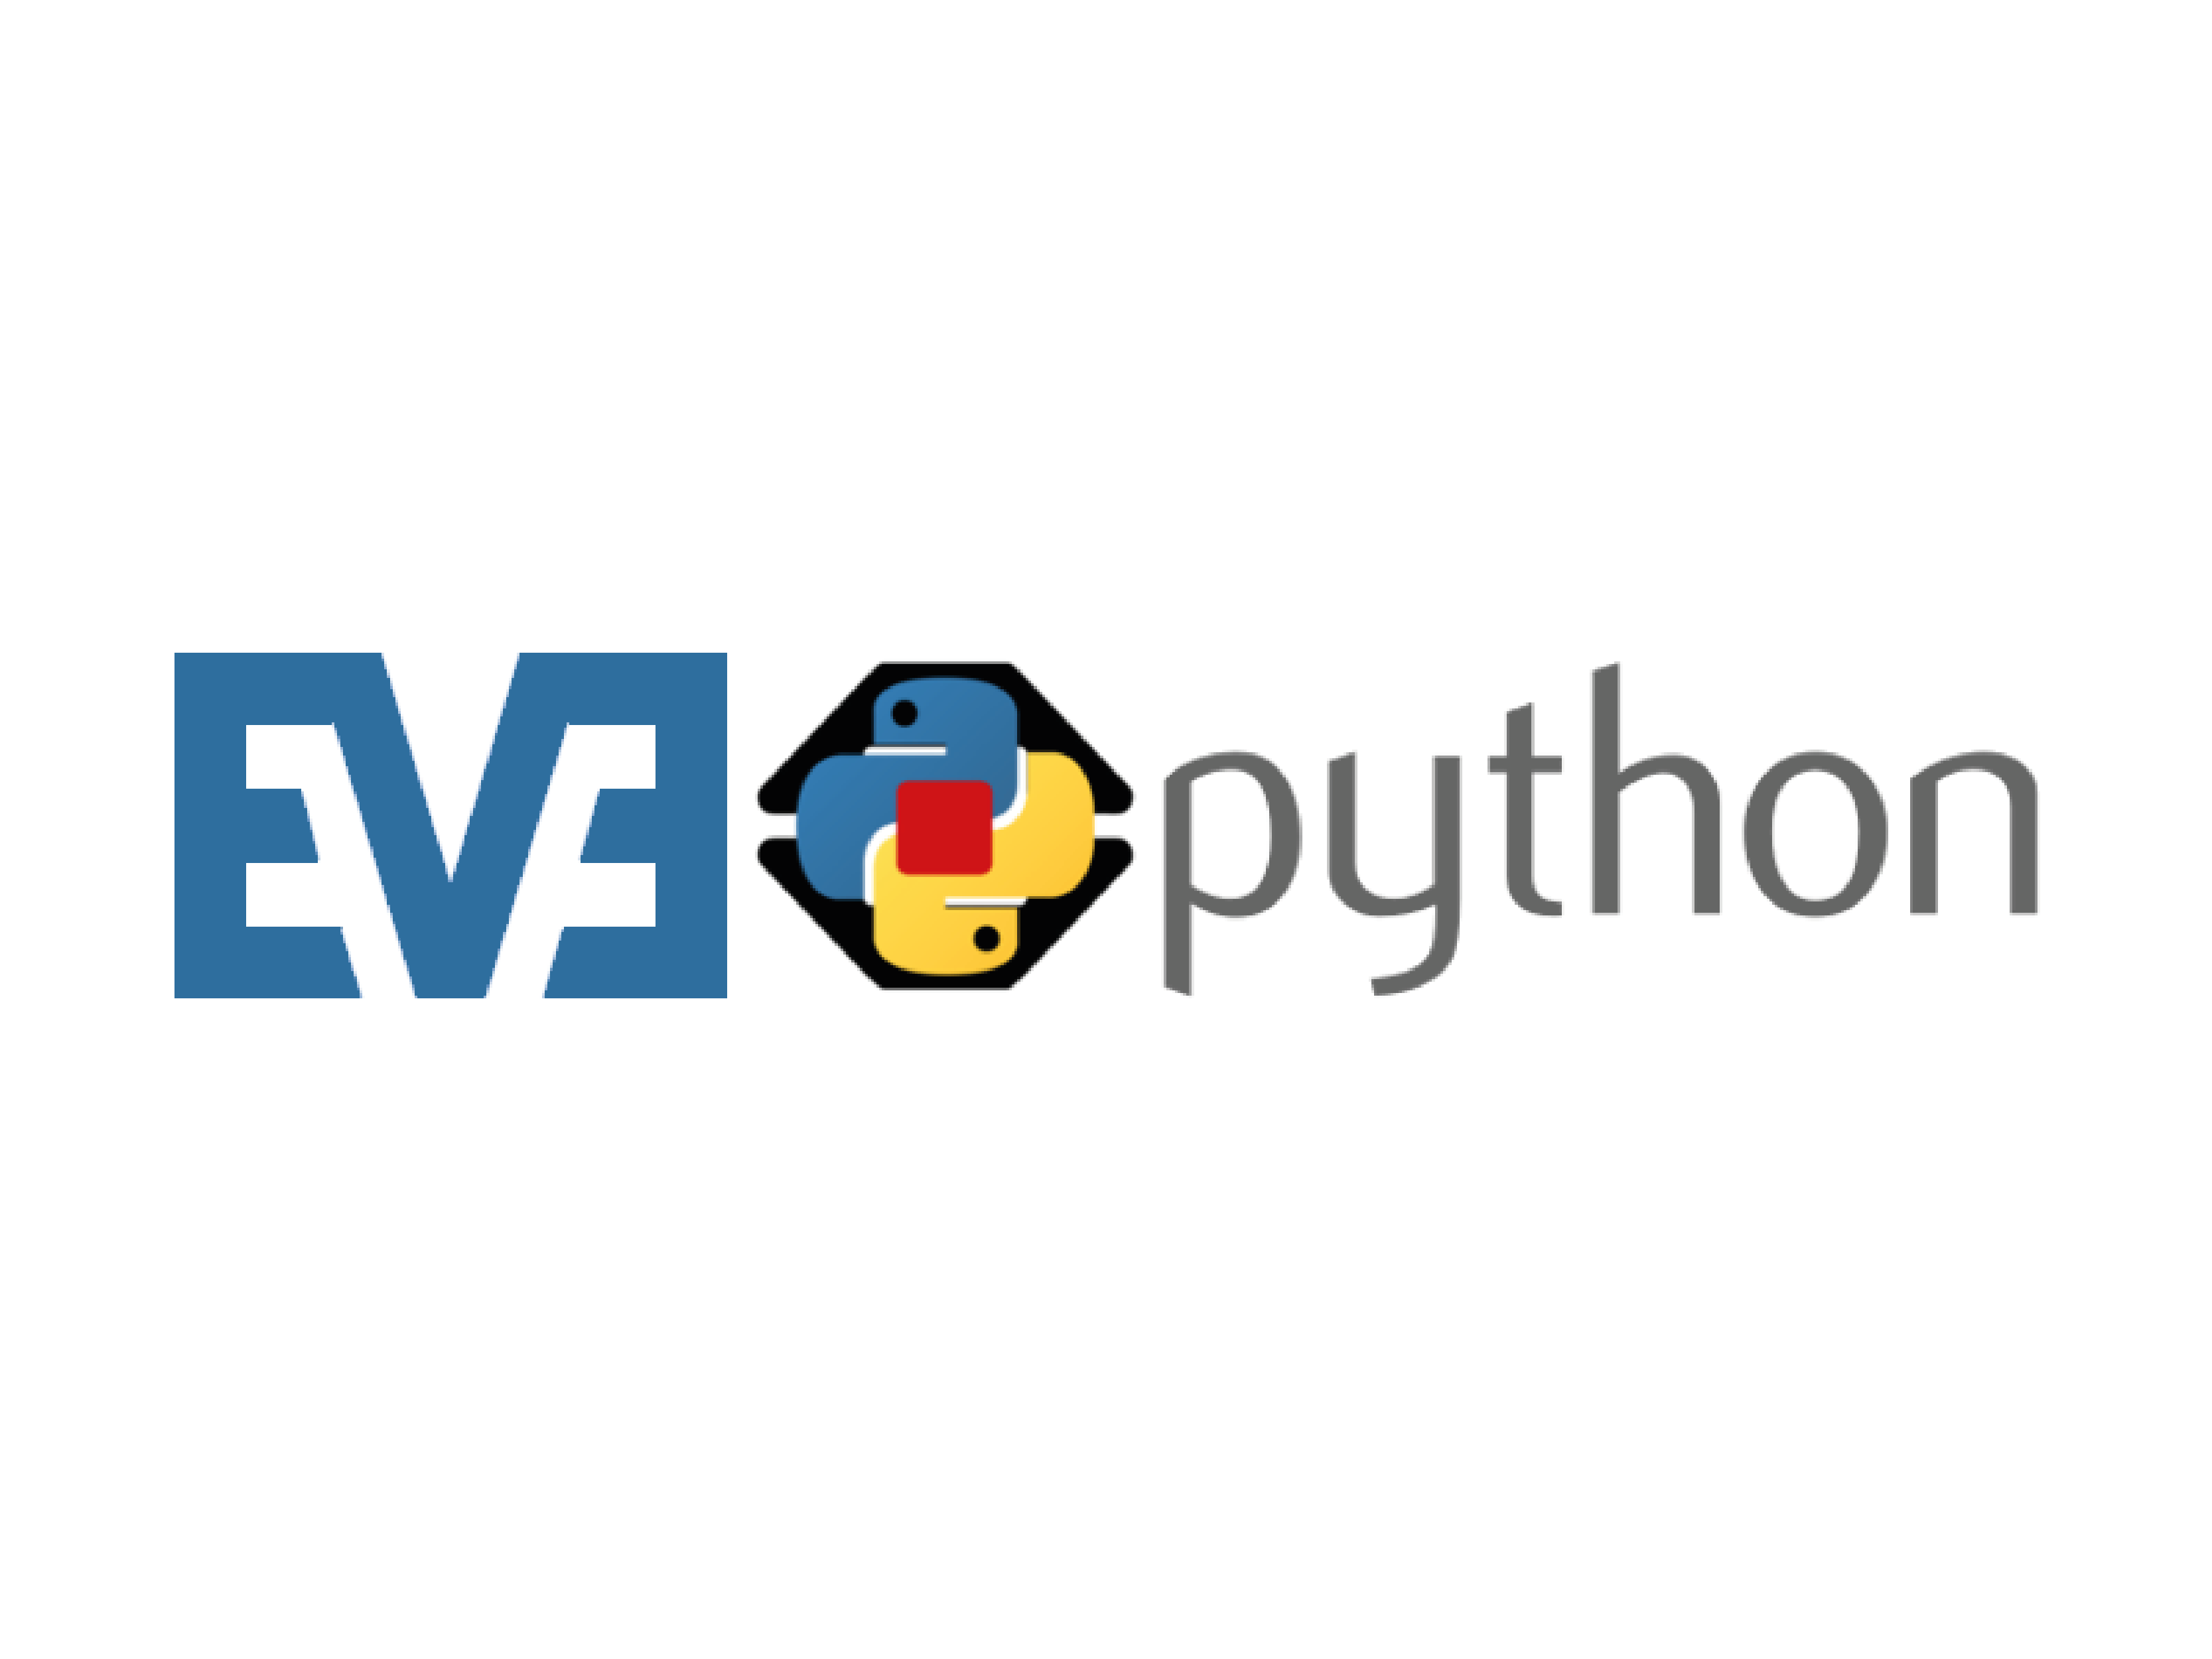 Python EV3